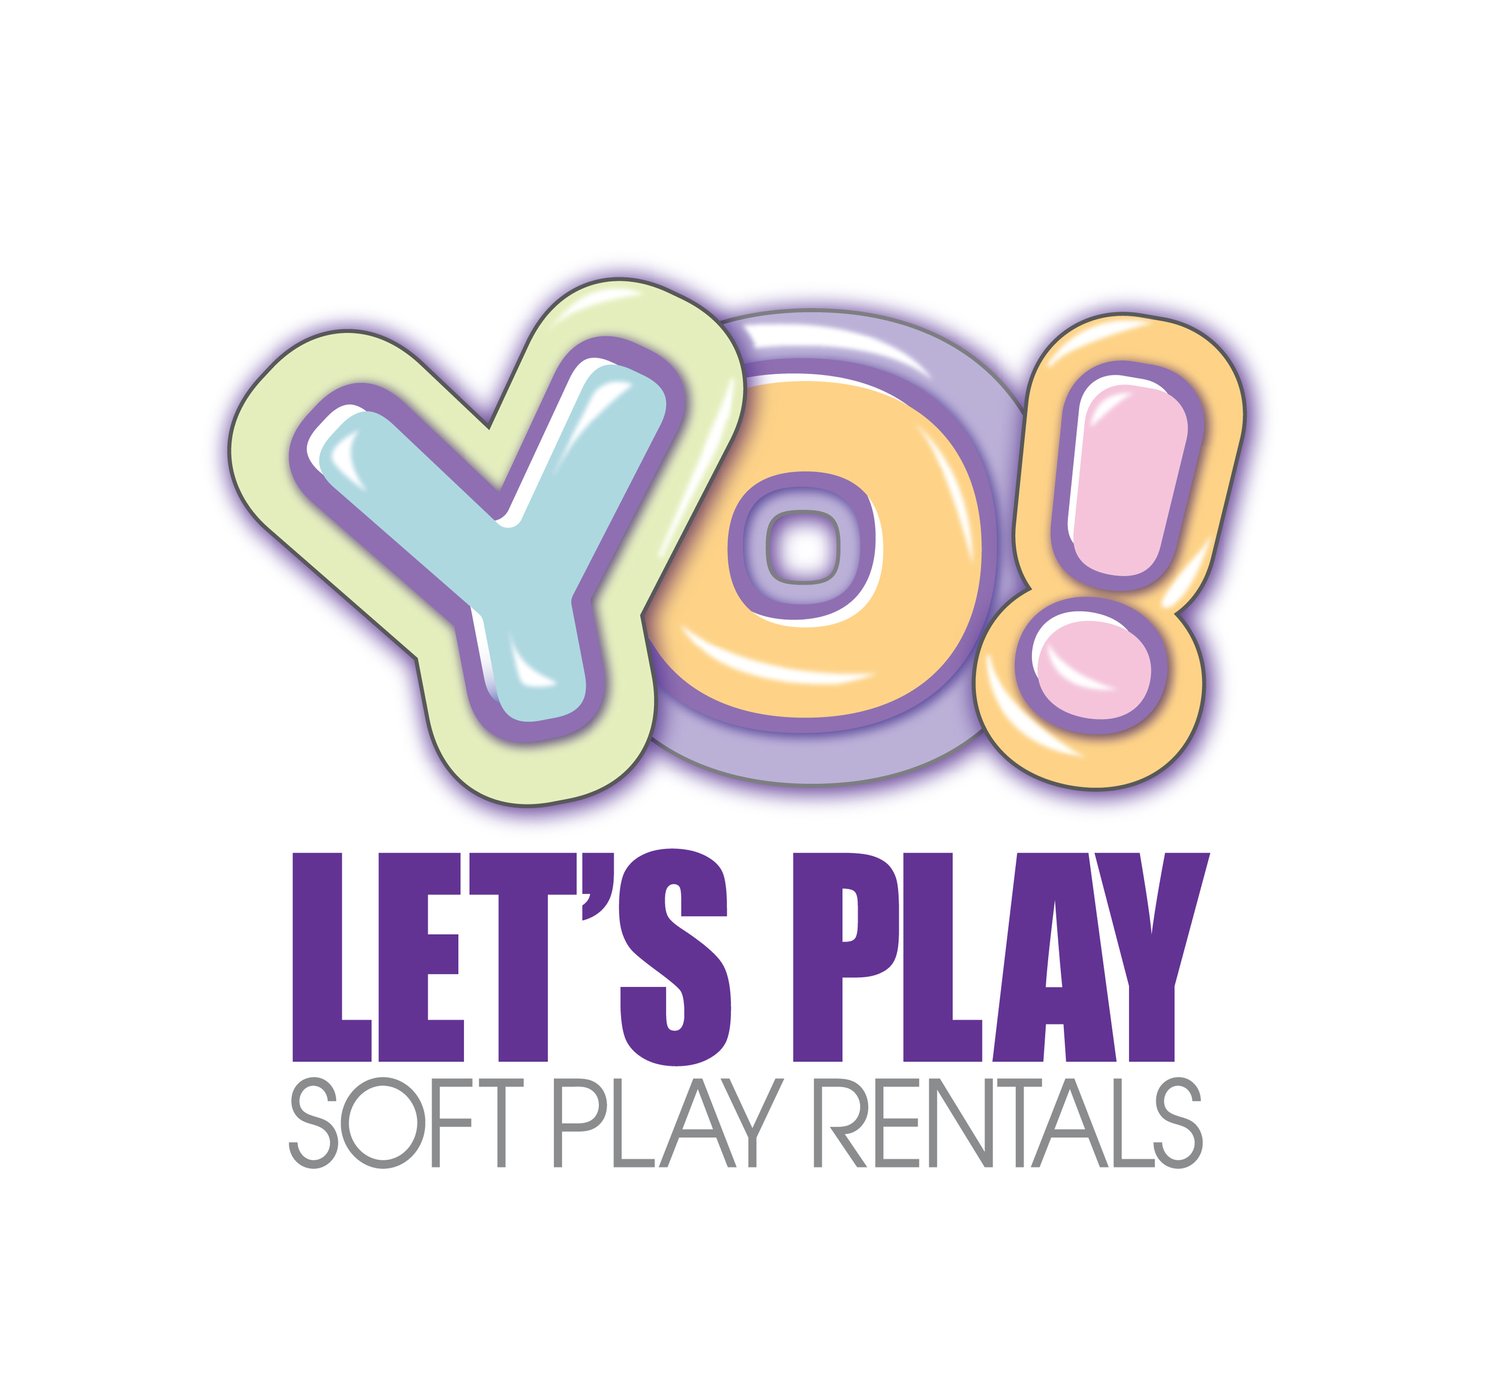 YO! Let’s Play Soft Play Rentals